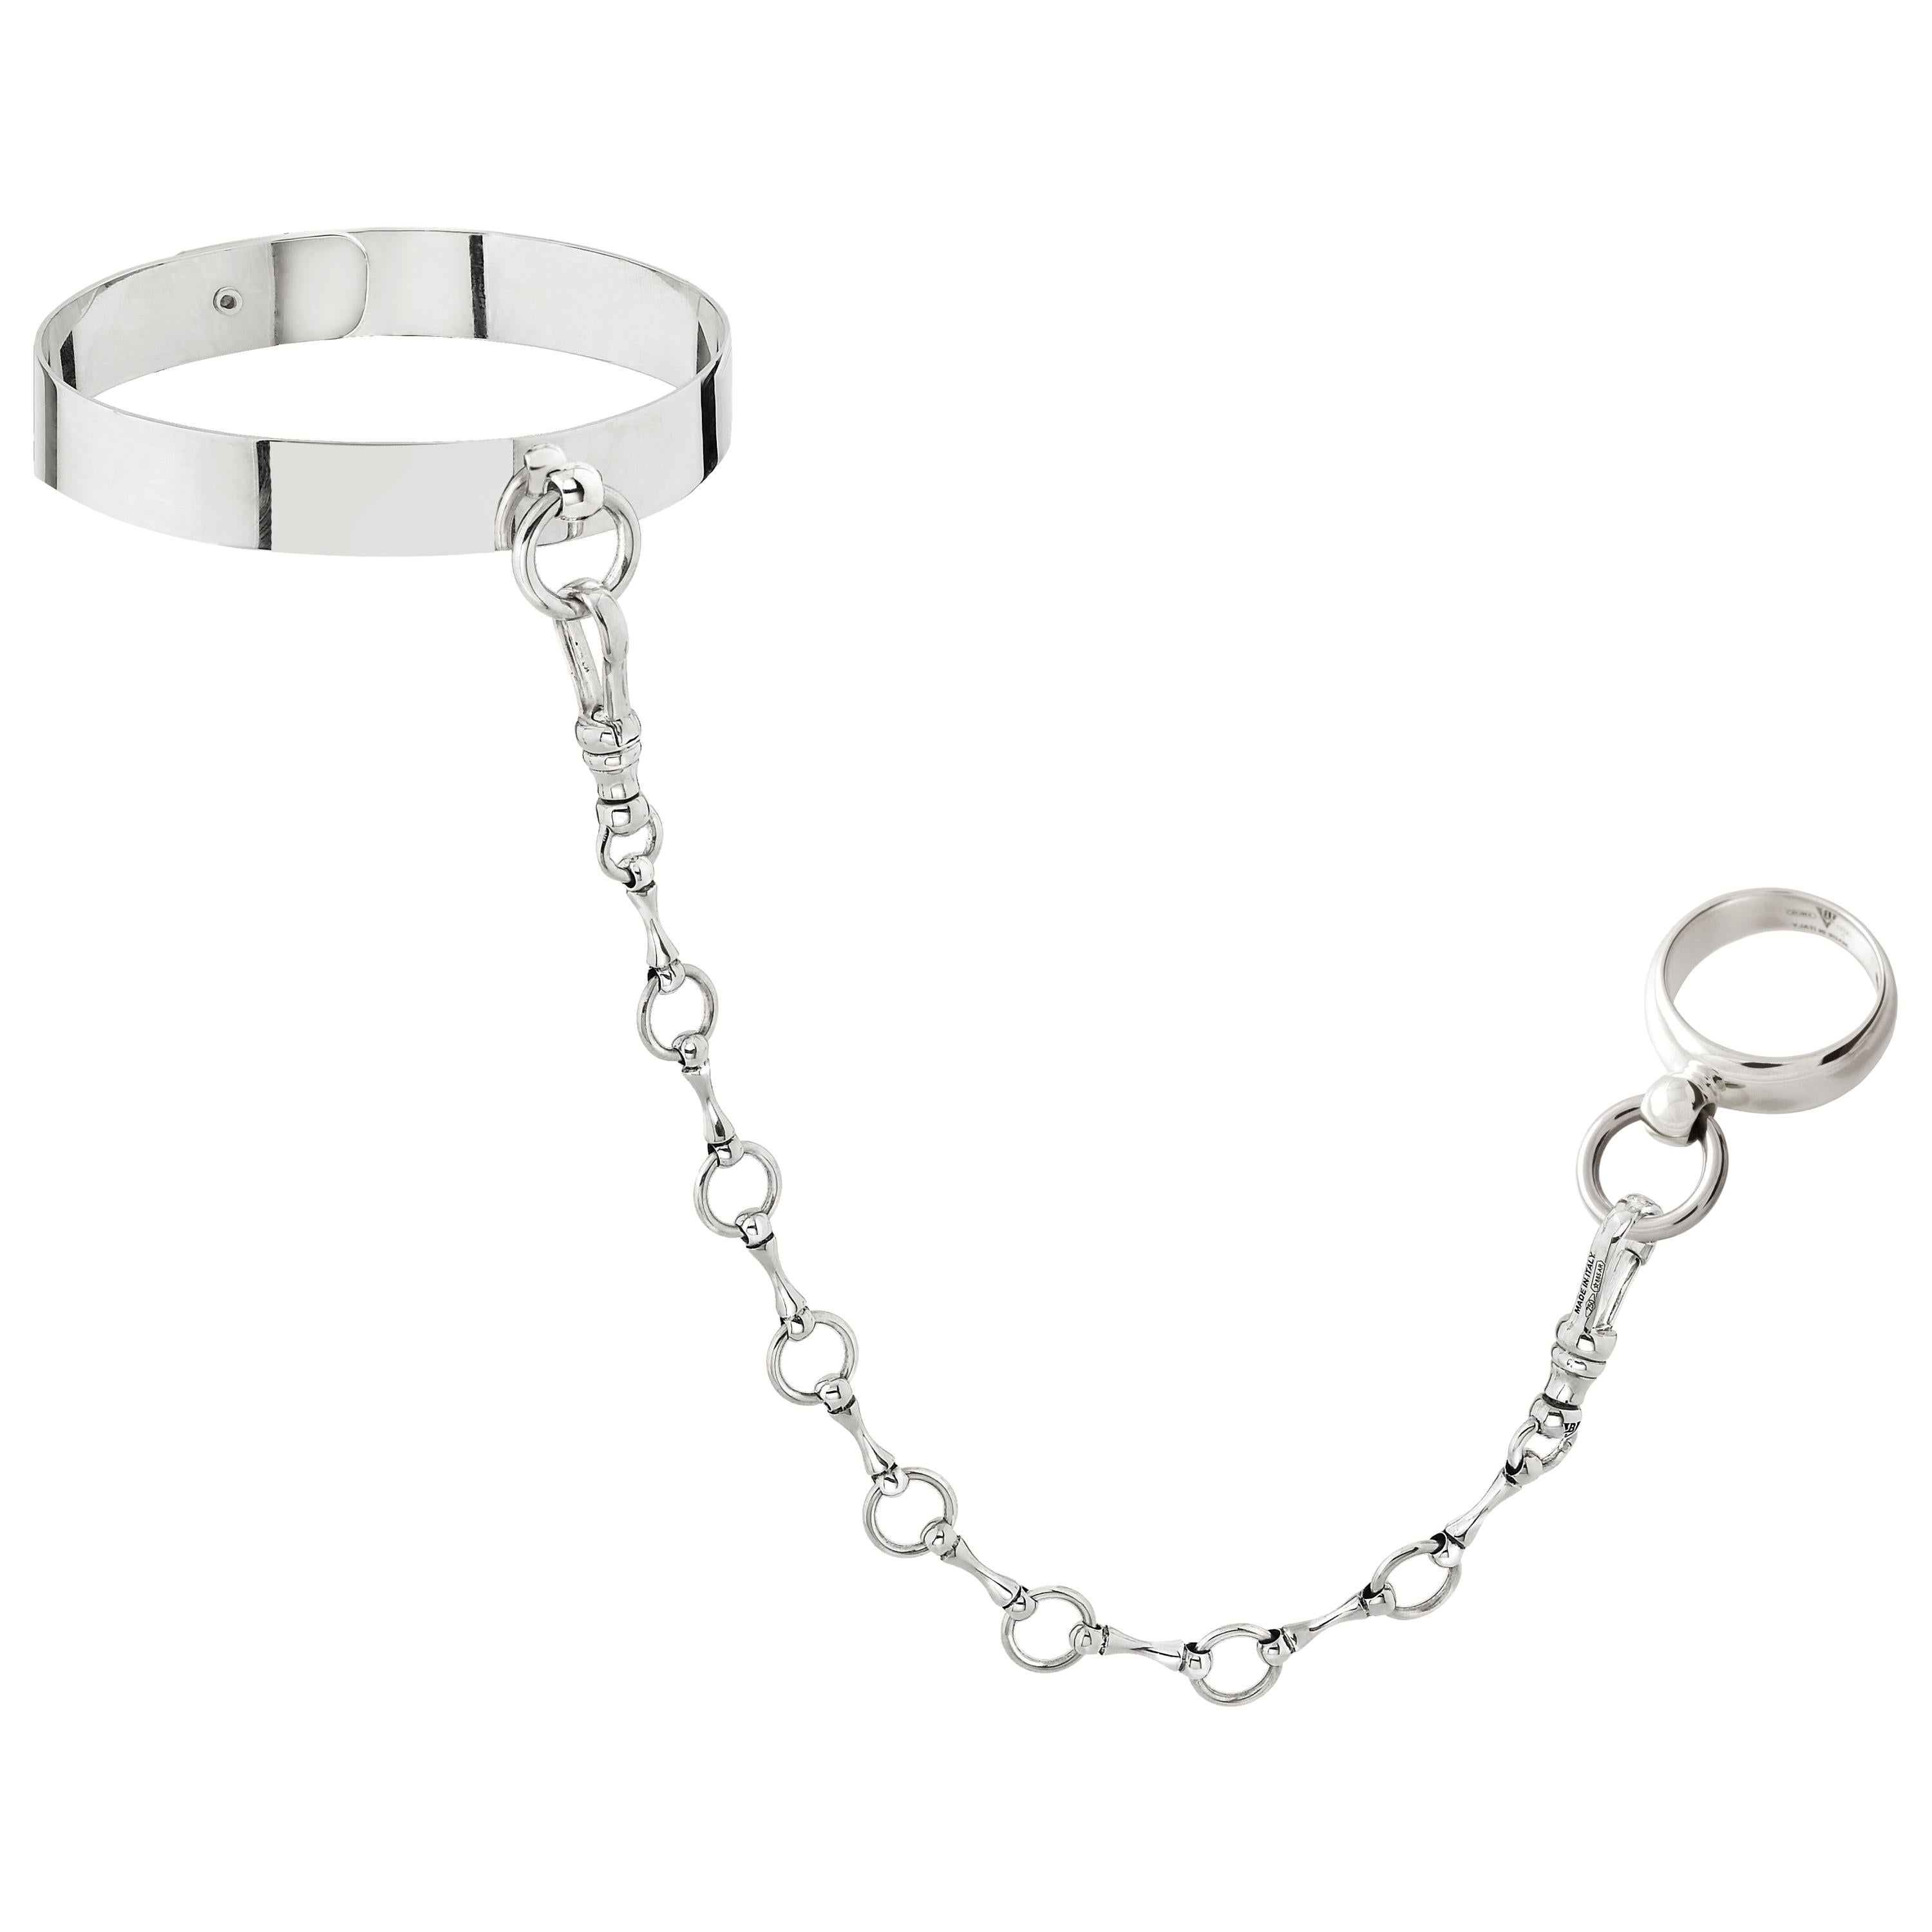 Betony Vernon "O'Ring Cuff Kit" Bracelet Chain Ring Sterling Silver 925 in Stock For Sale